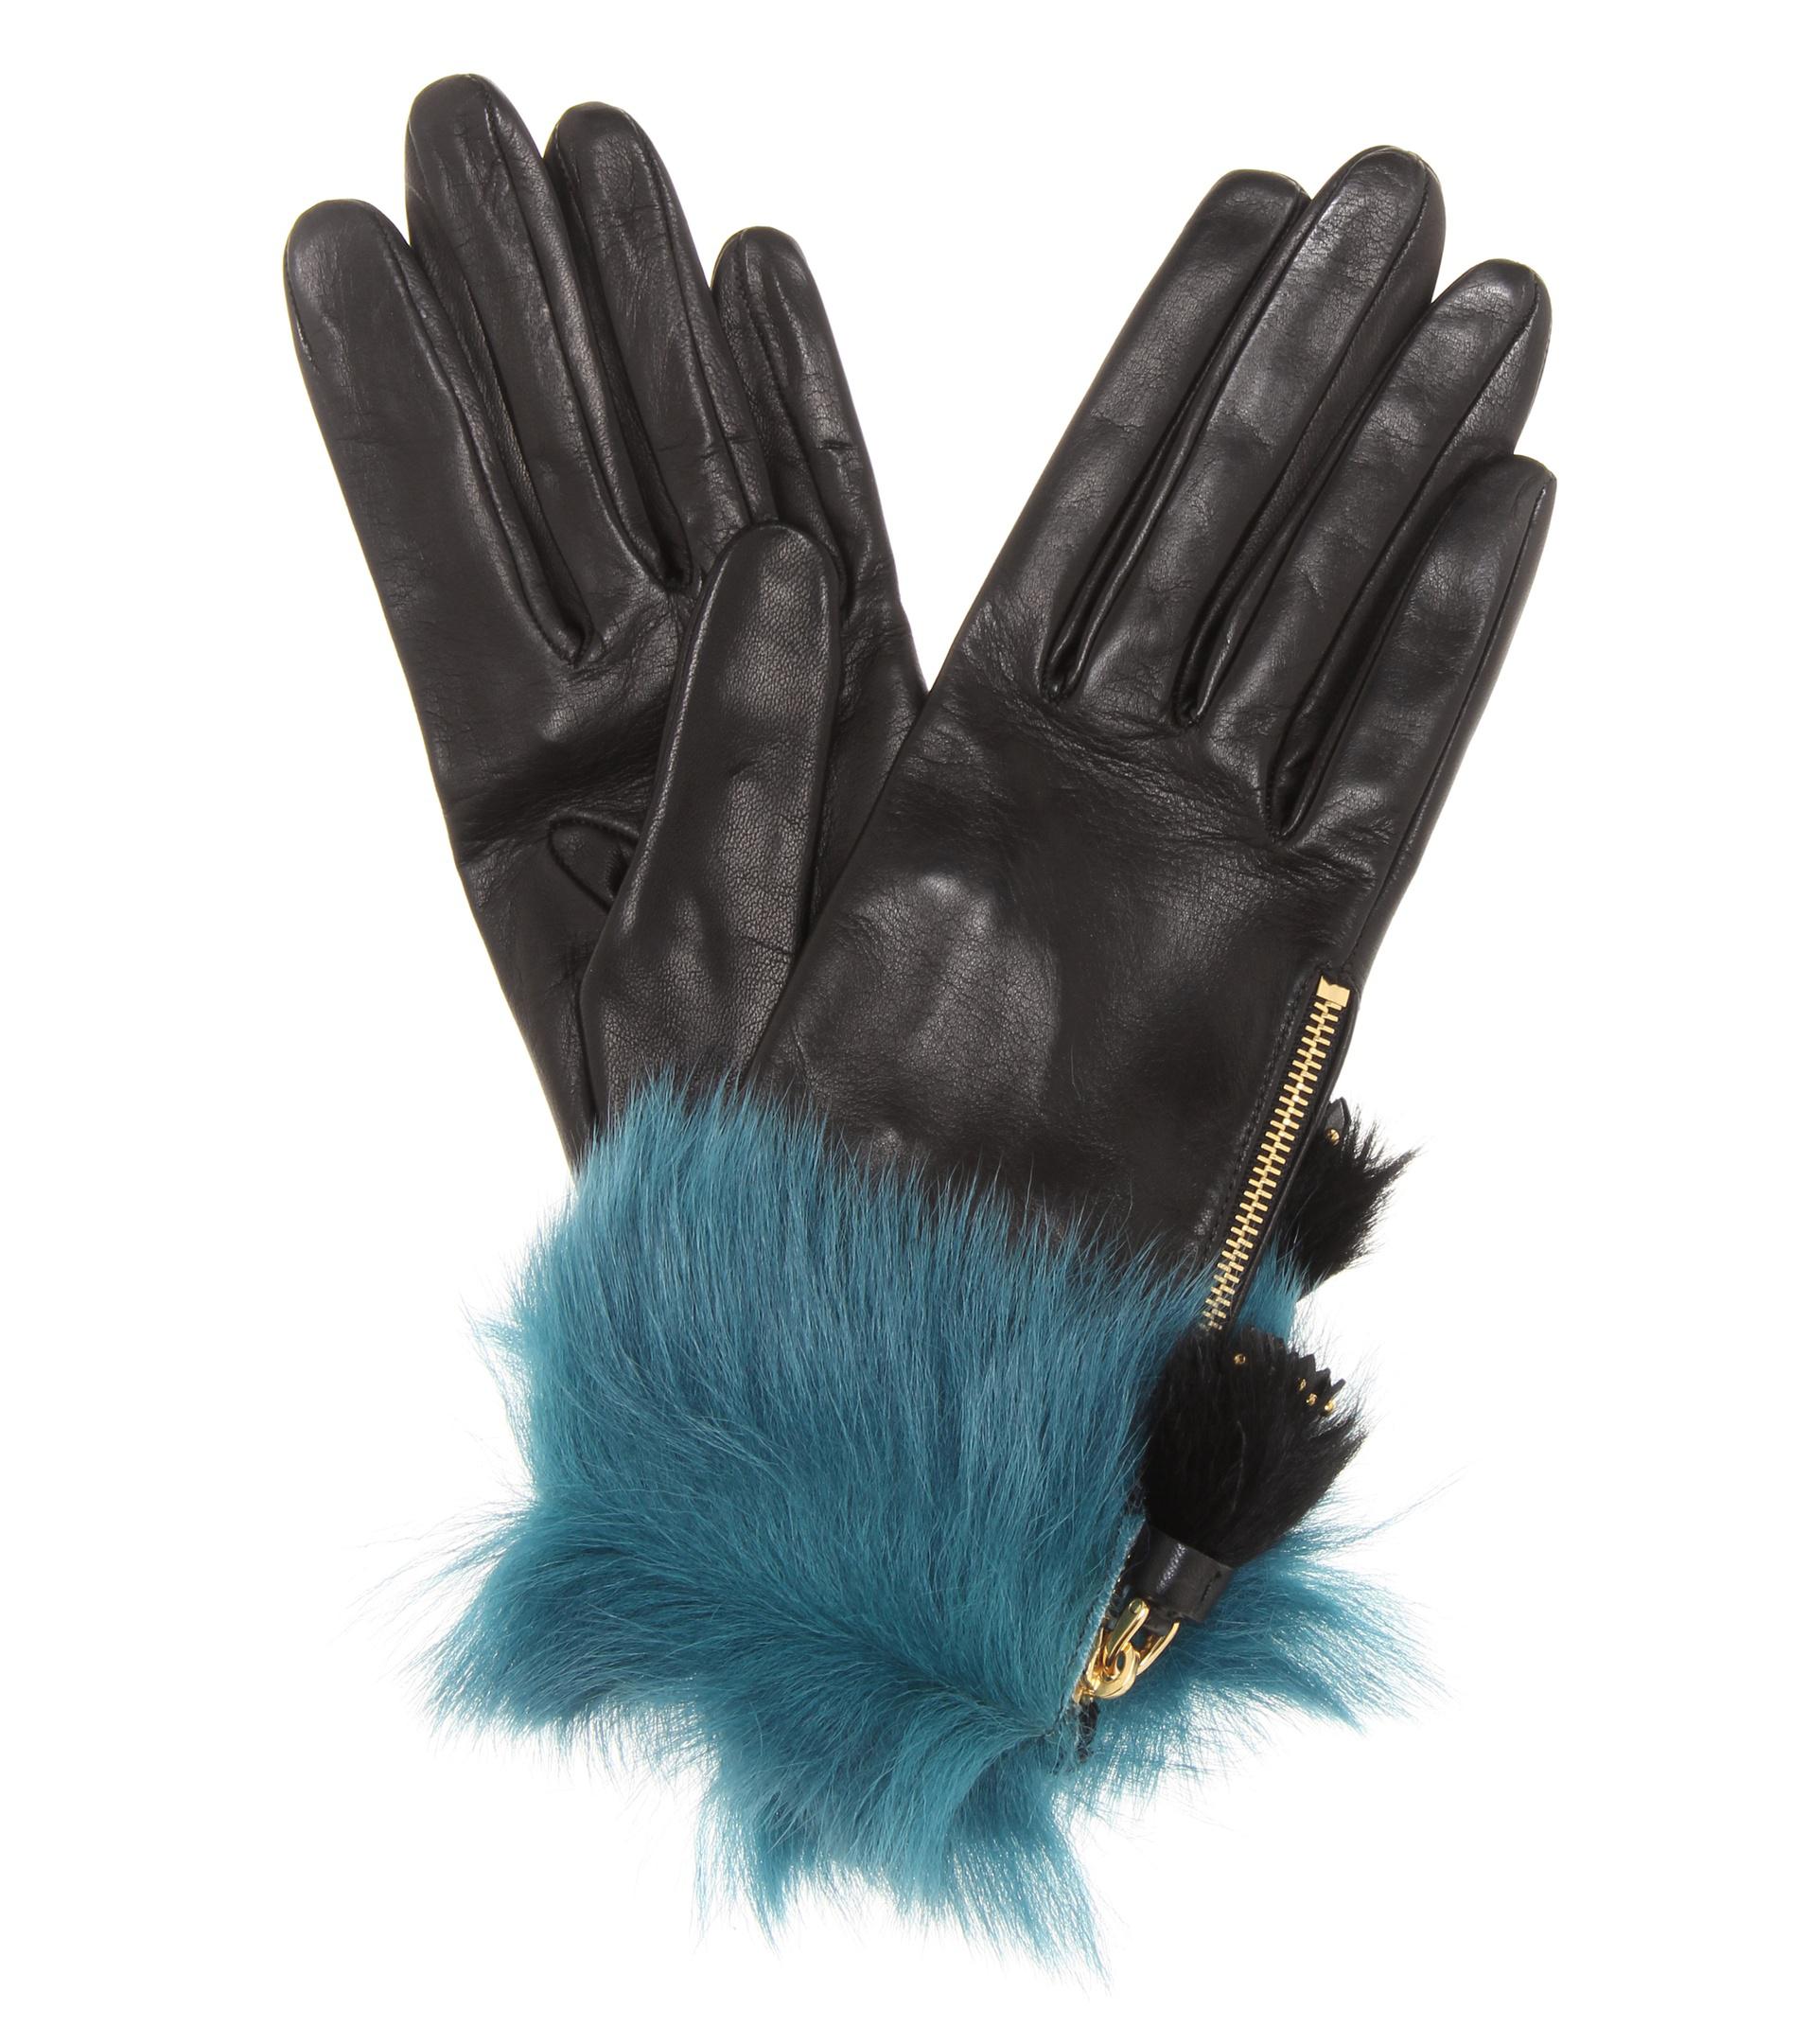 Lyst - Prada Fur-trimmed Leather Gloves in Black